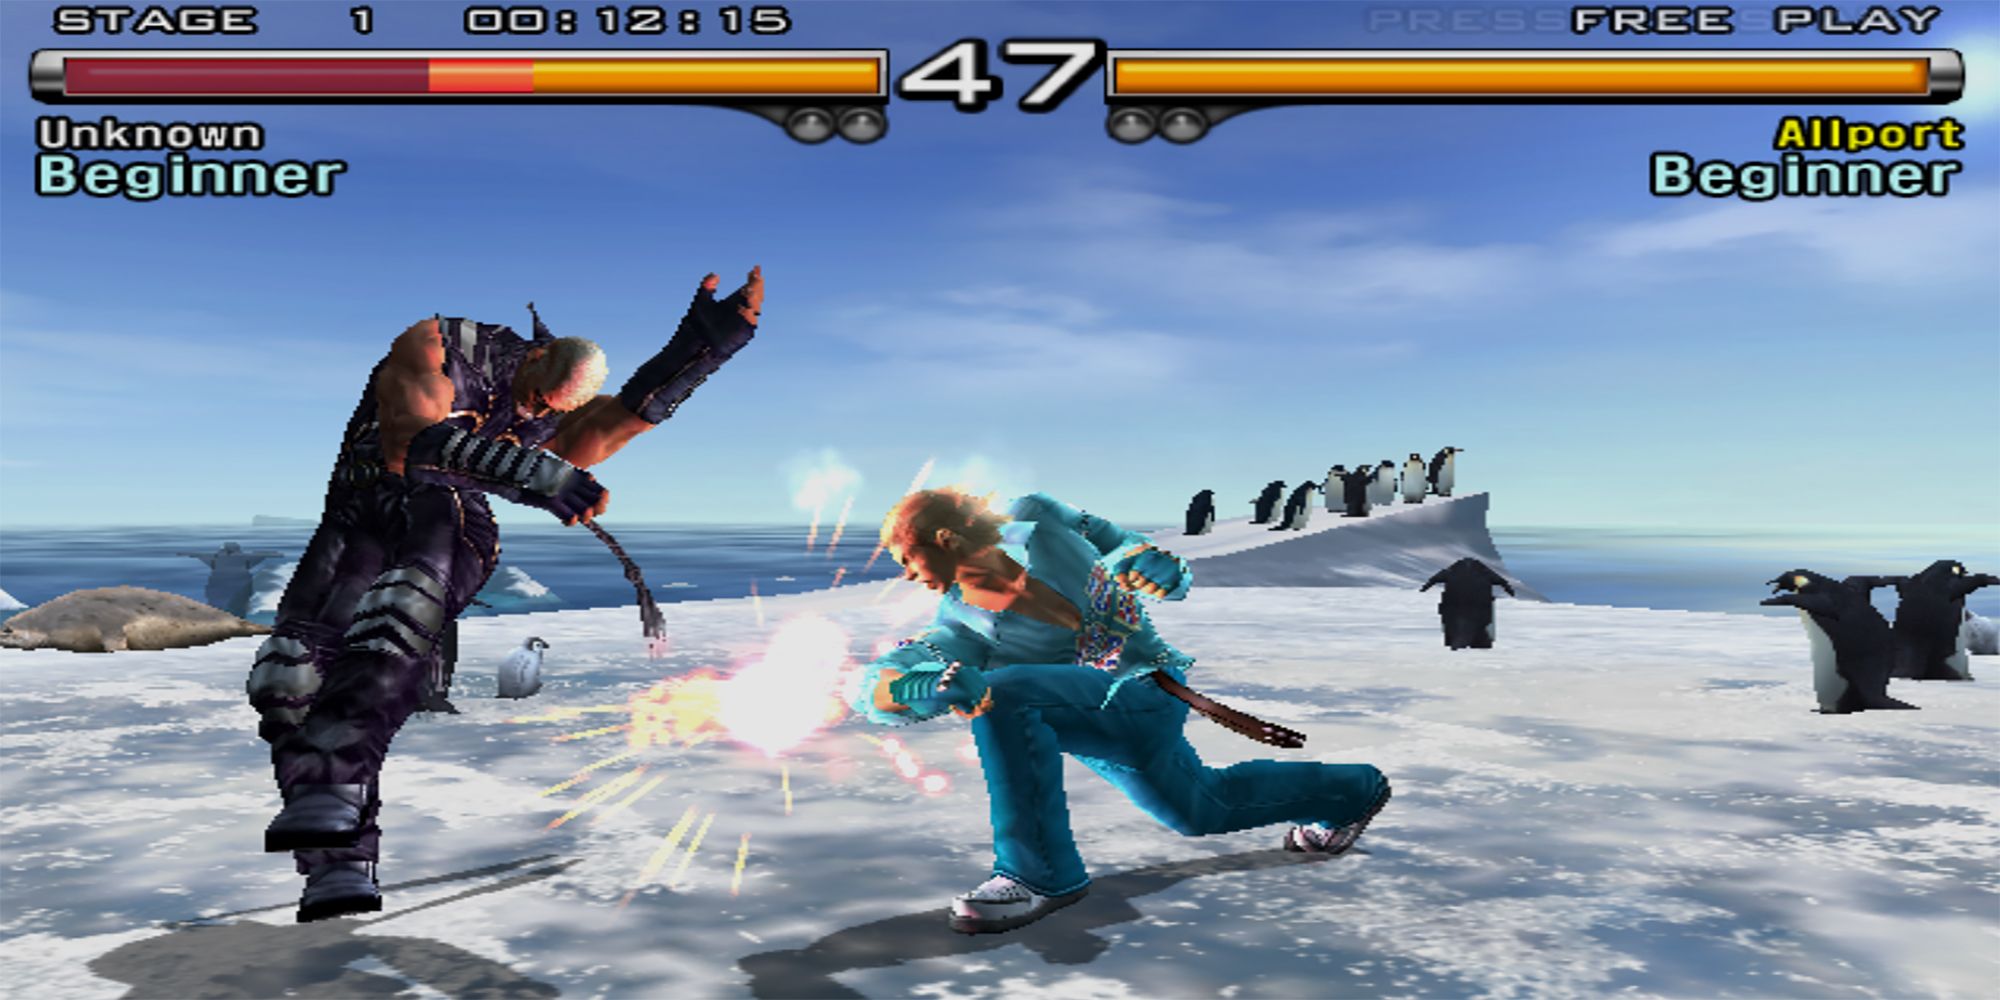 Steve punches Raven during a battle on a polar ice cap in Tekken 5.